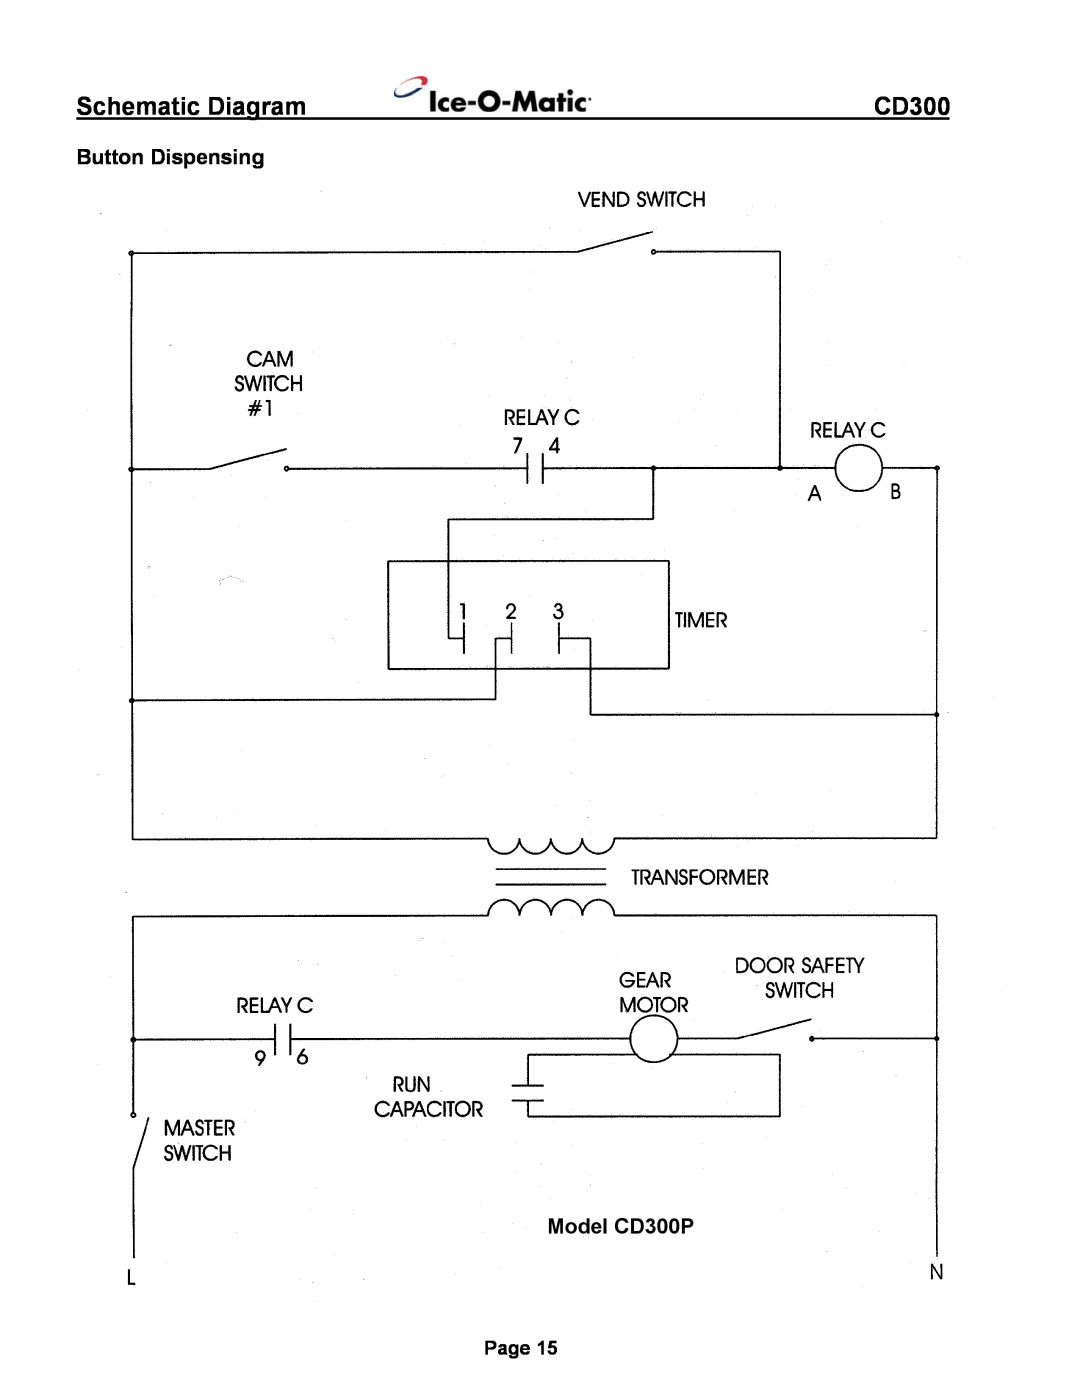 Ice-O-Matic installation manual Schematic Diagram, Button Dispensing Model CD300P 